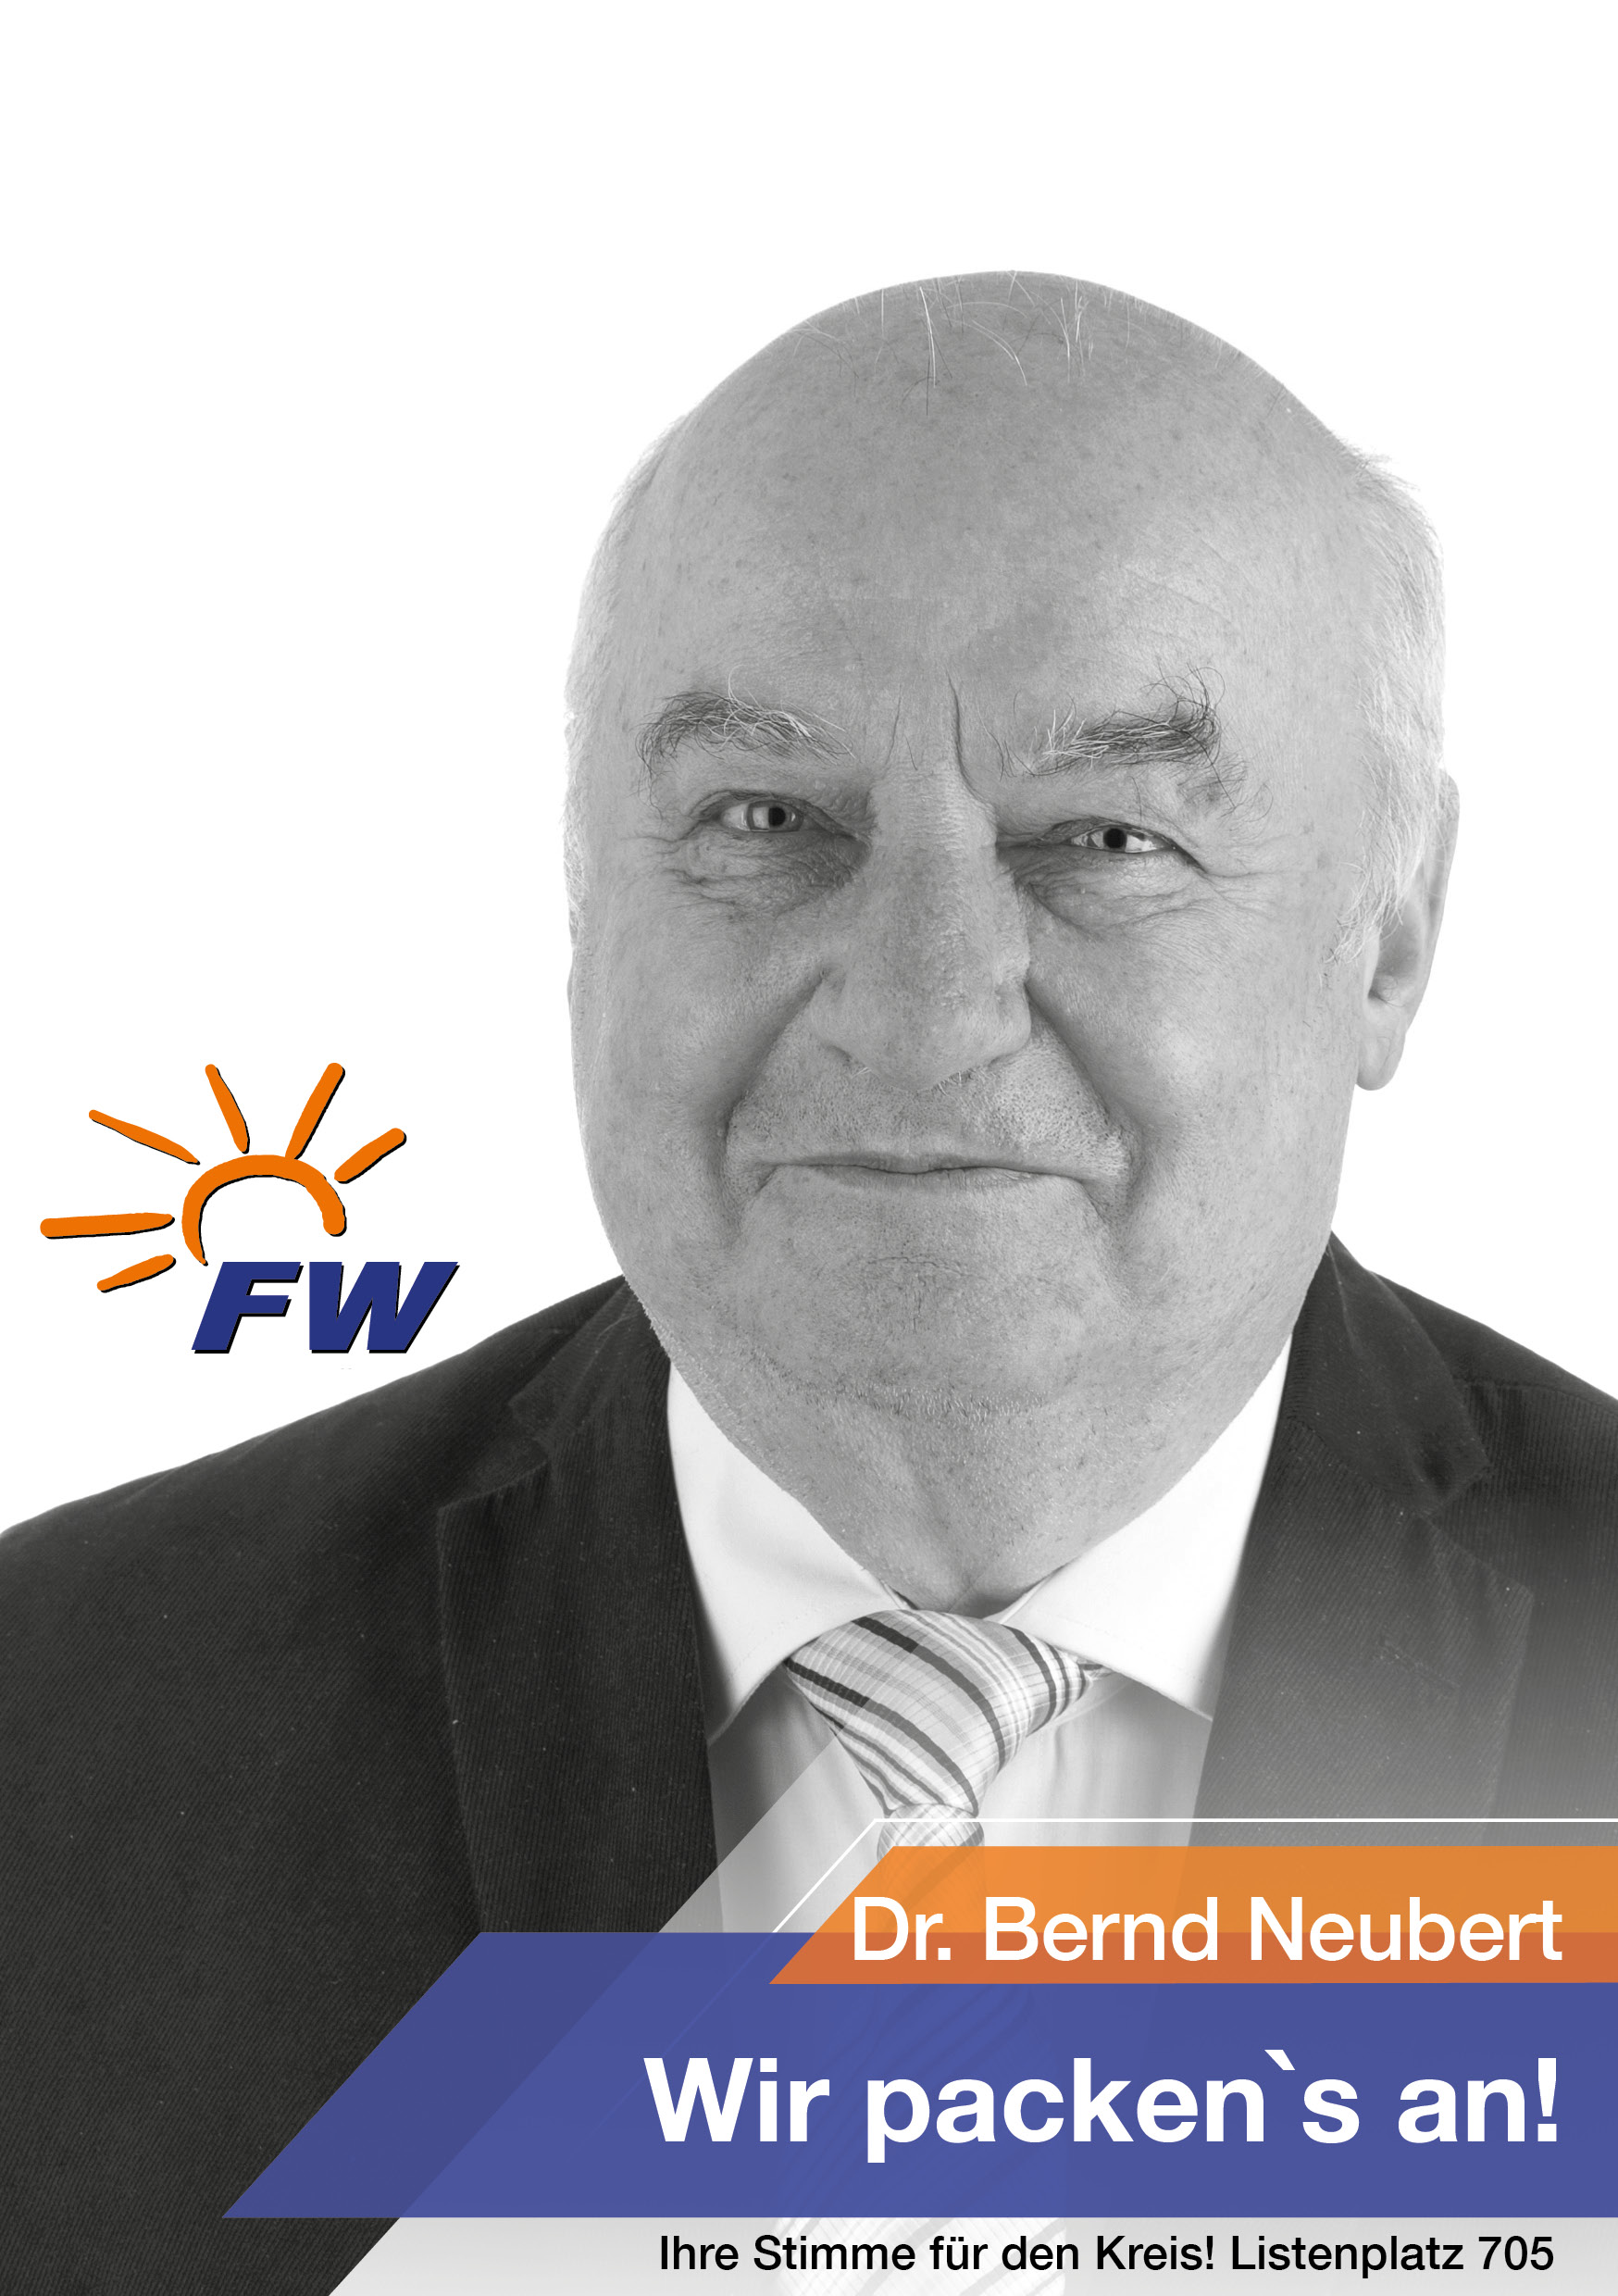 Dr. Bernd Neubert